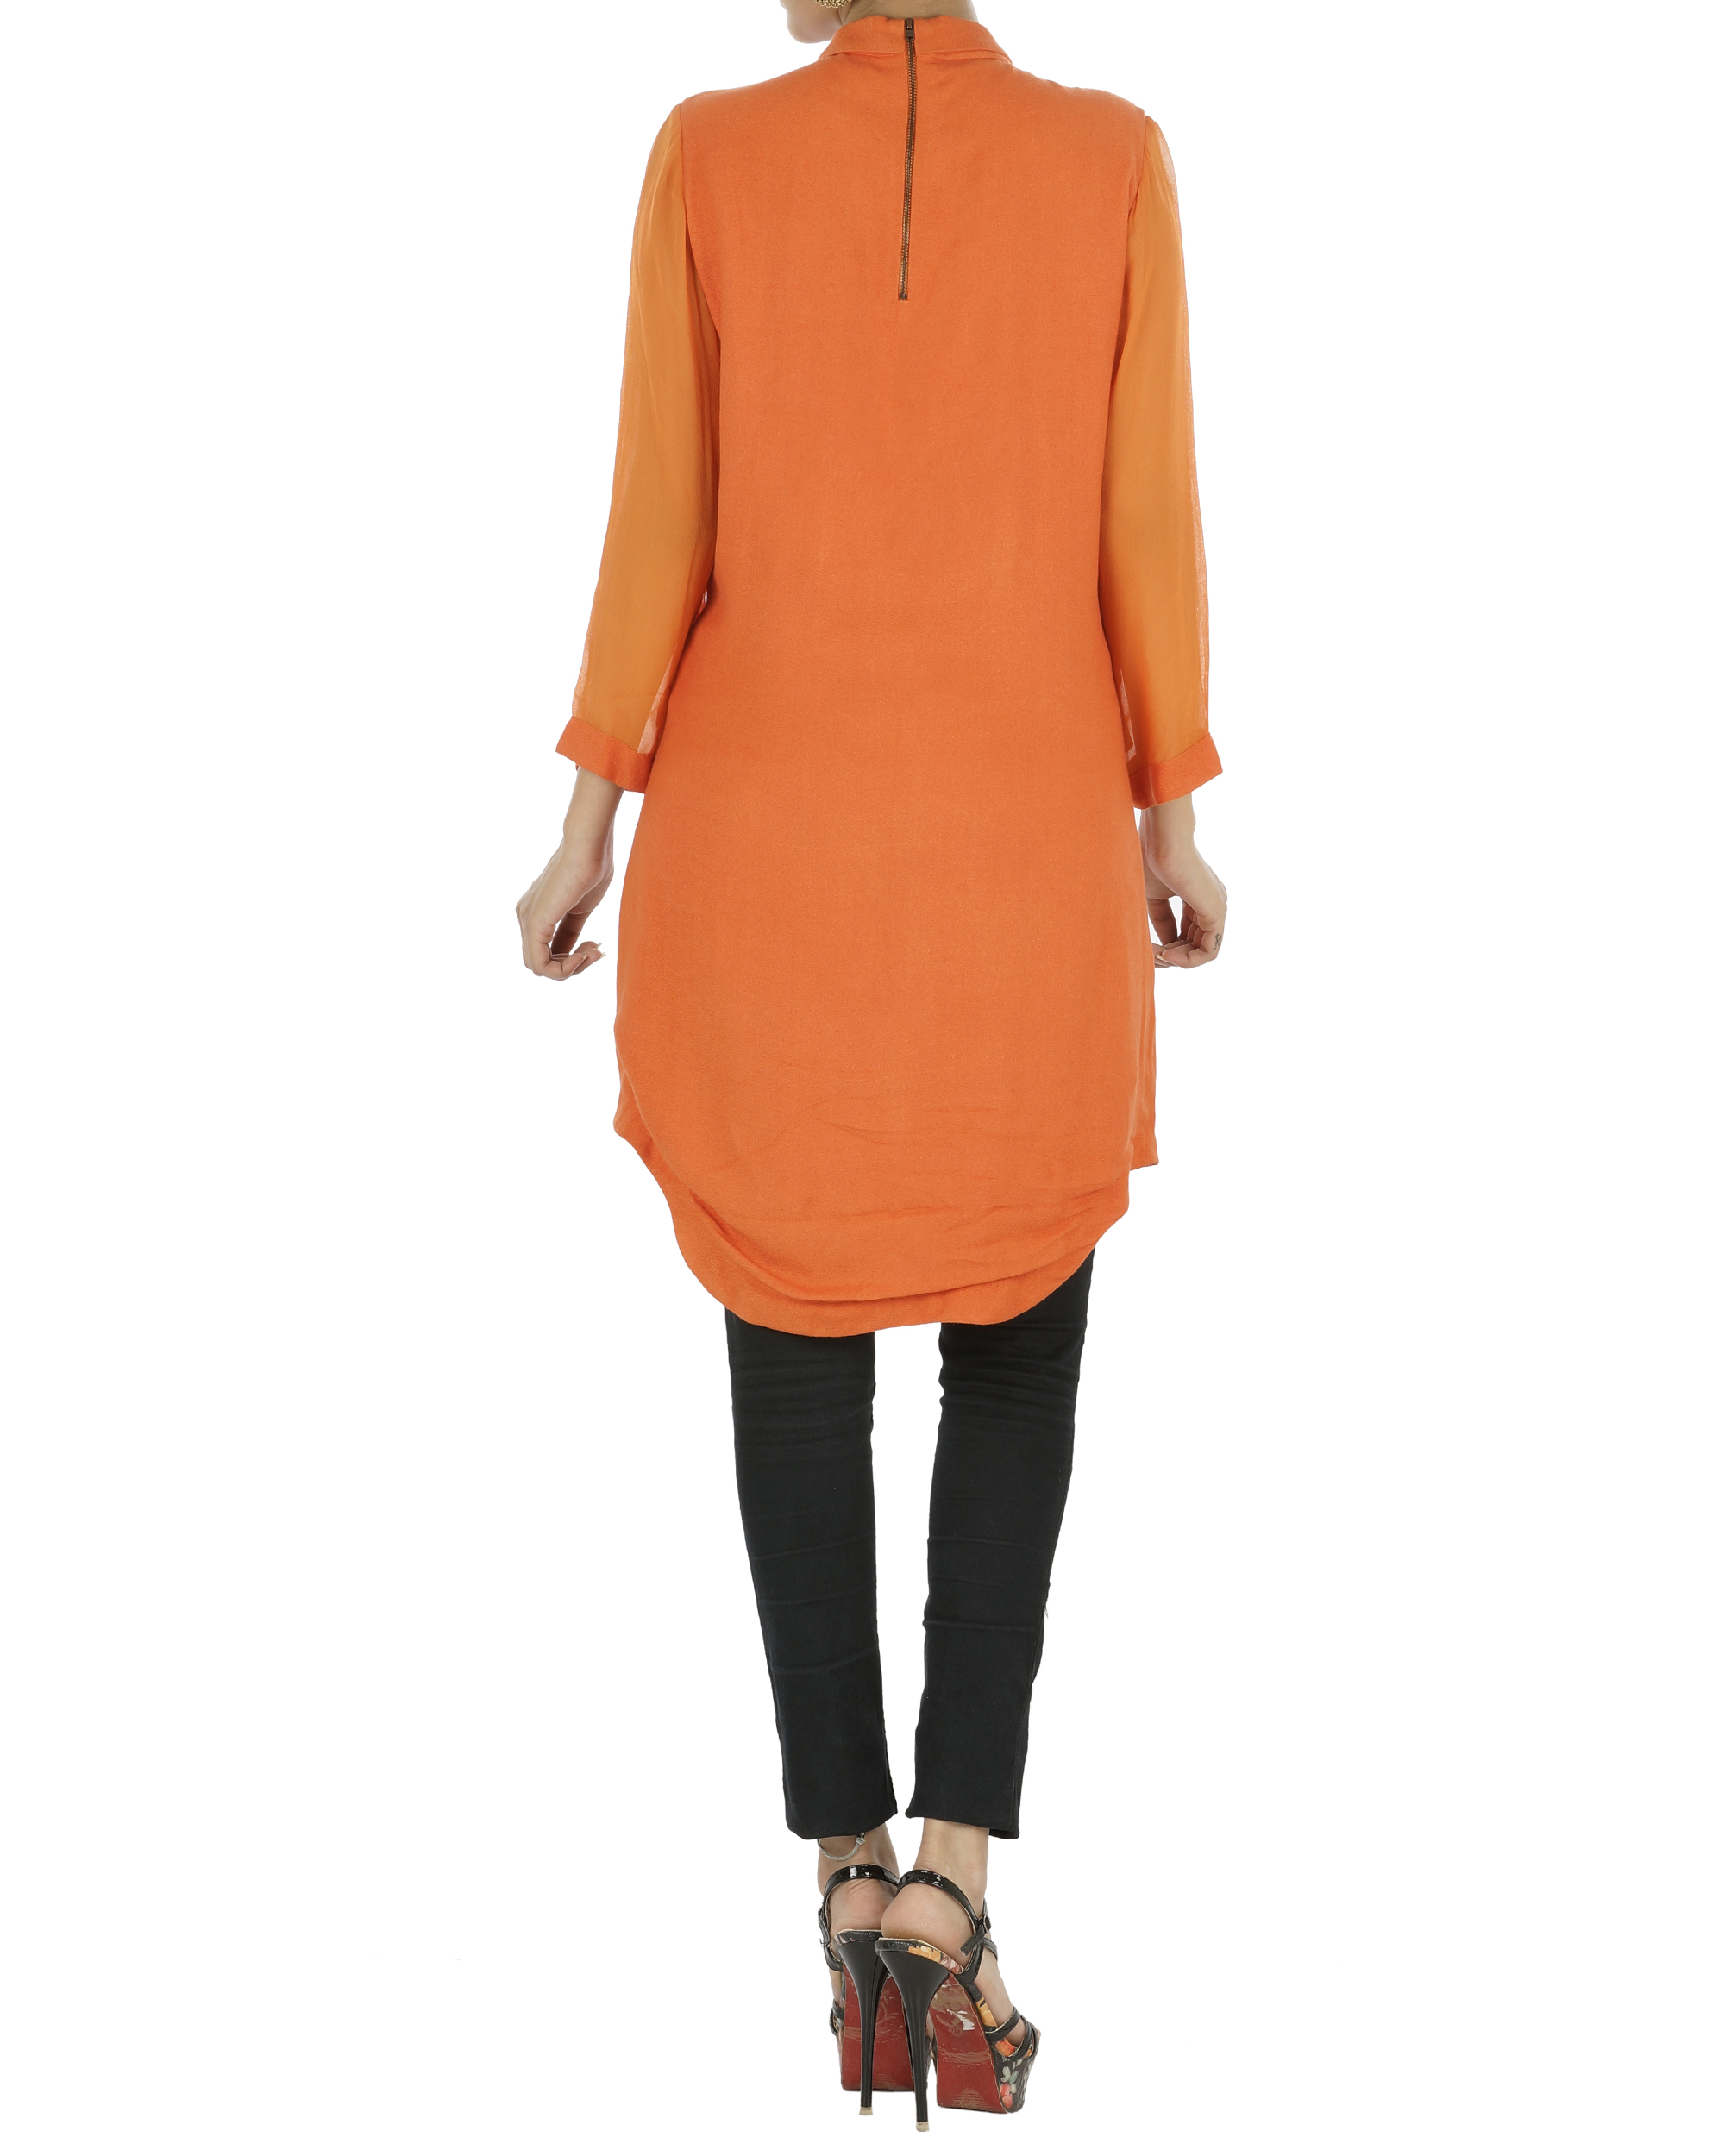 Orange tunic with gota work by Manoj Dubey | The Secret Label